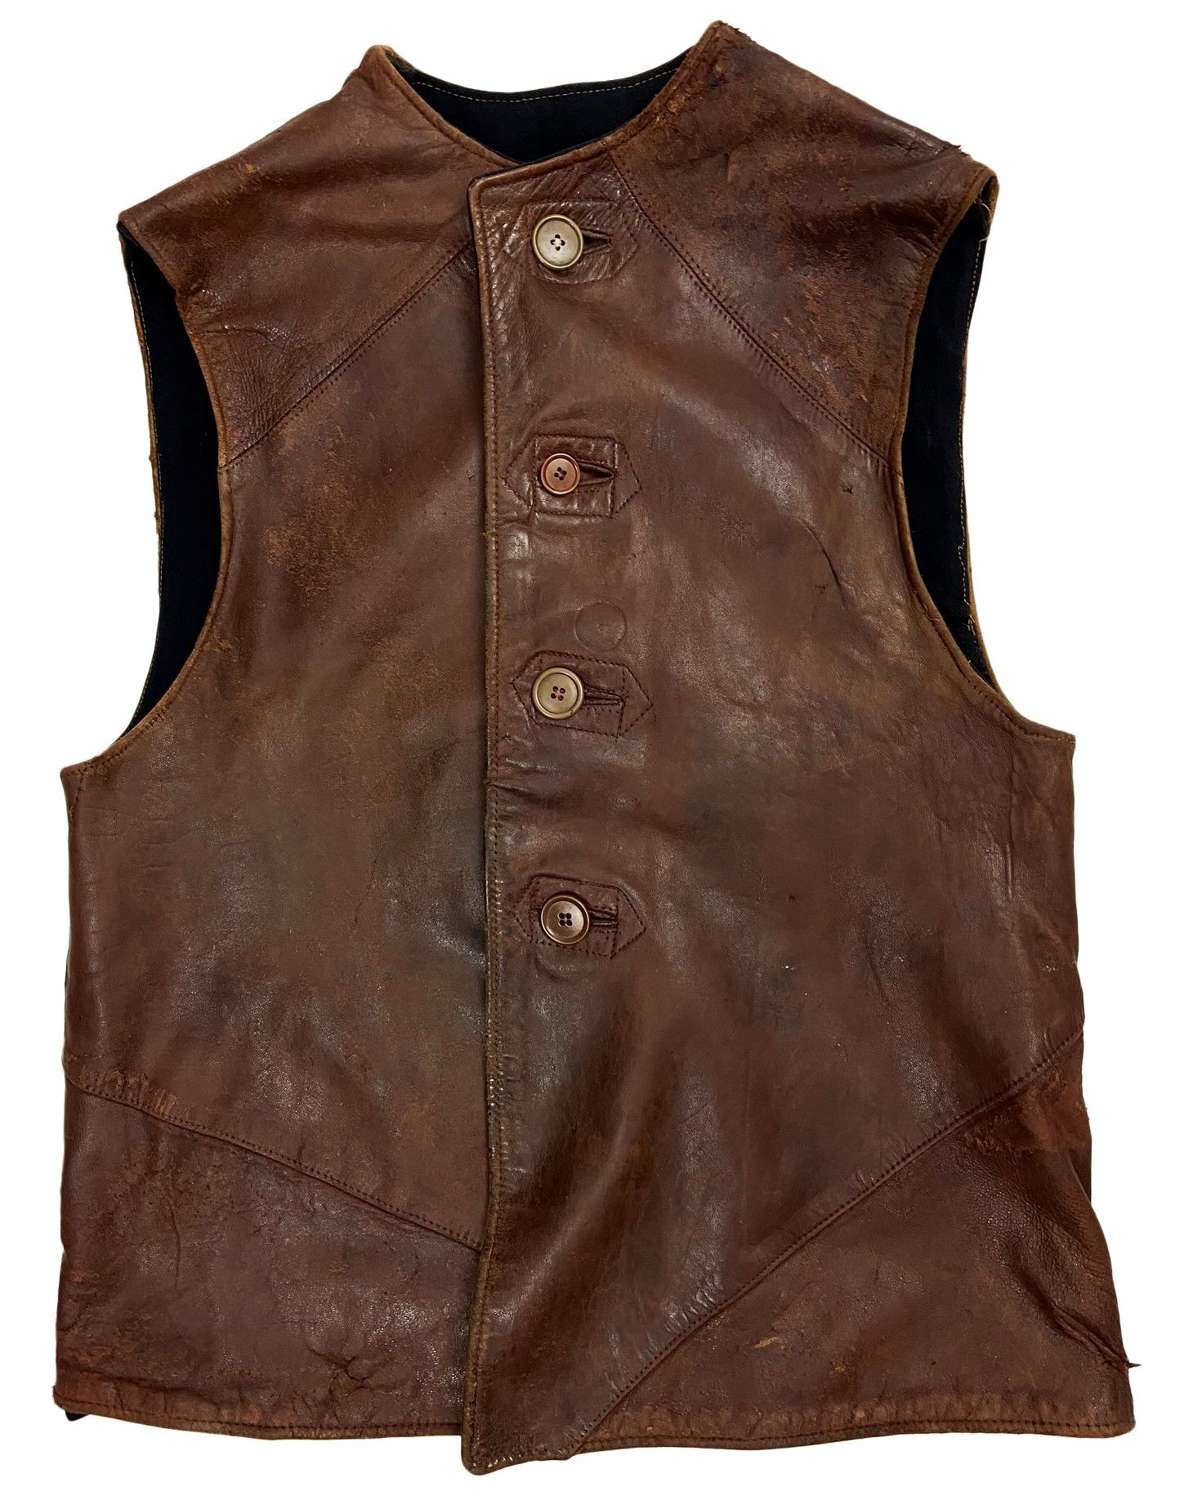 Original 1940s British Leather Jerkin - Dark Lining